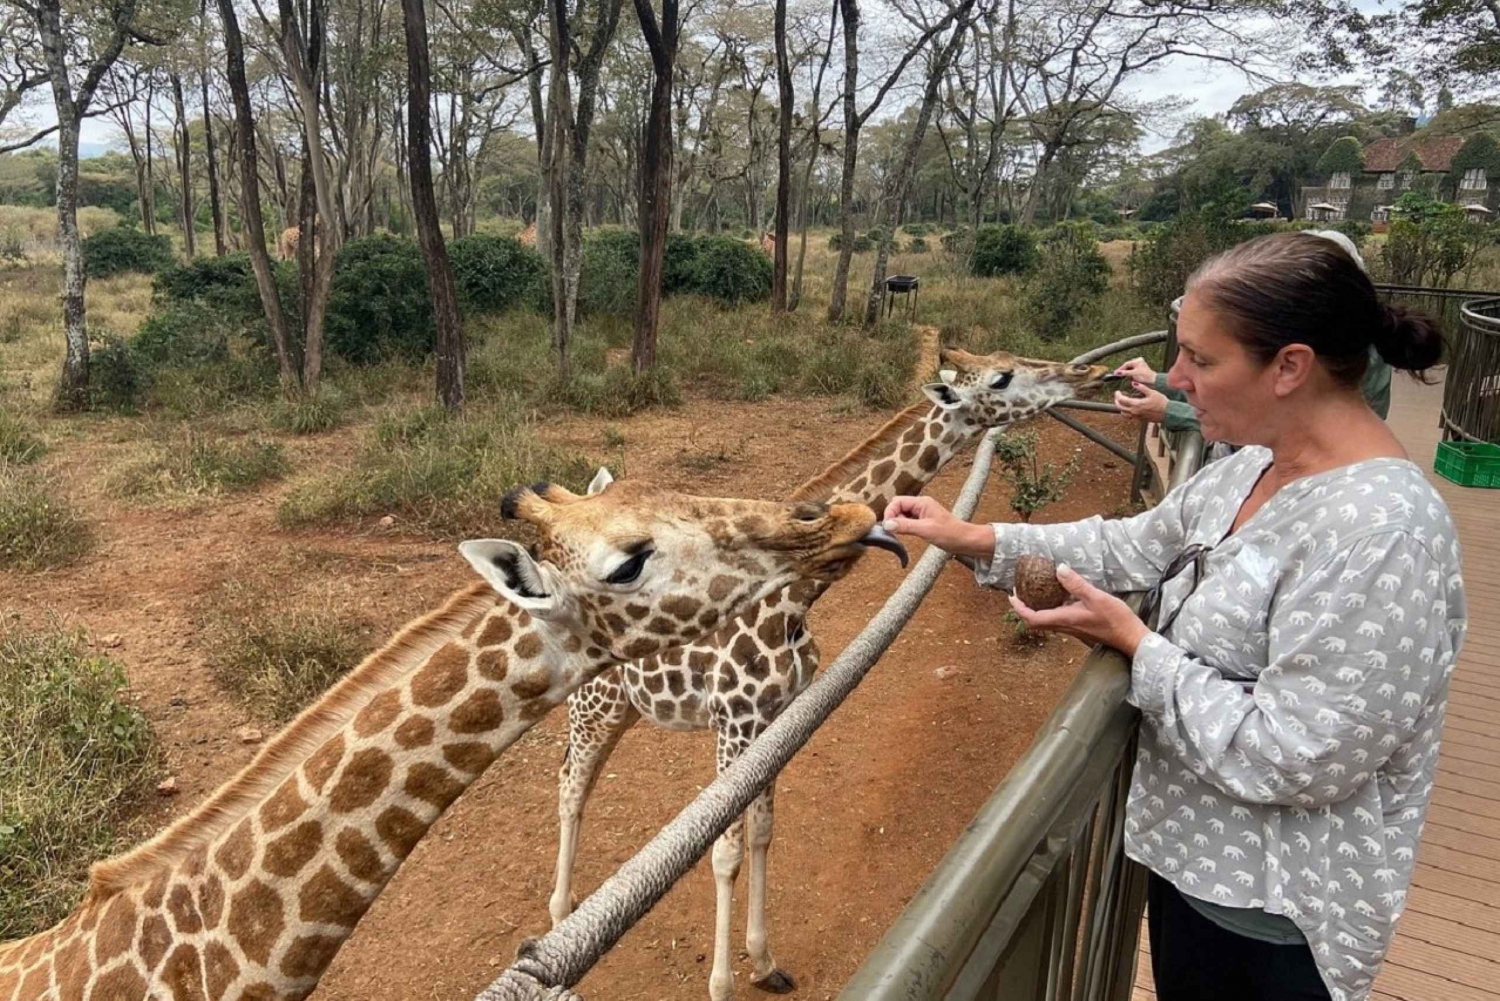 Giraffe center, Karen blixen and kazuri kobe beads tour